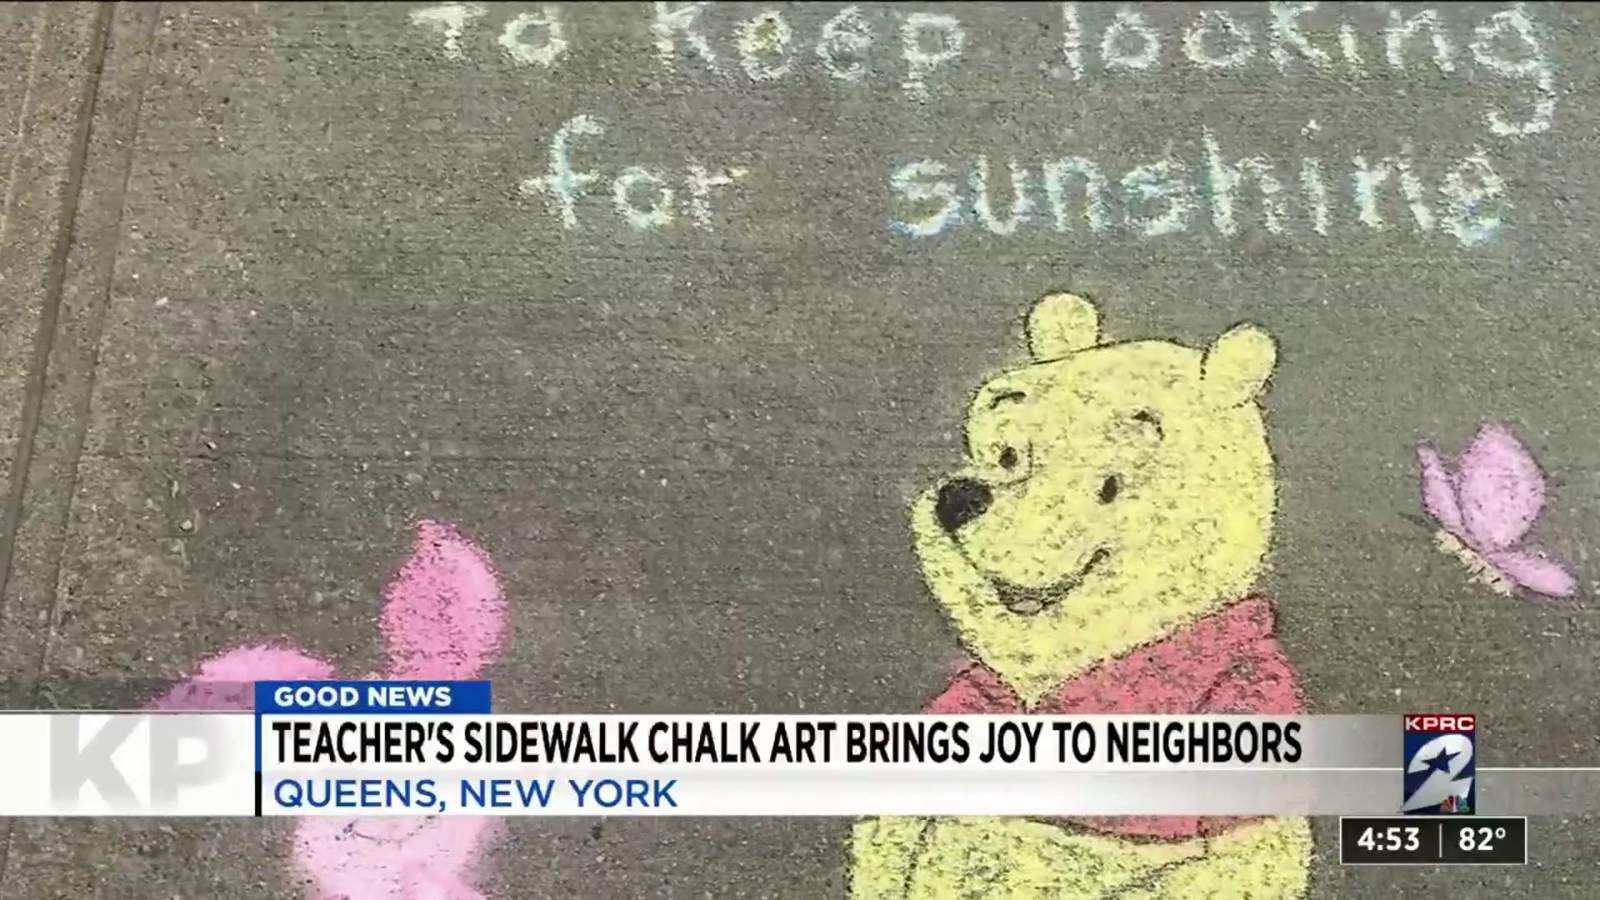 One Good Thing: Teachers colorful and creative sidewalk chalk brings joy to neighbors